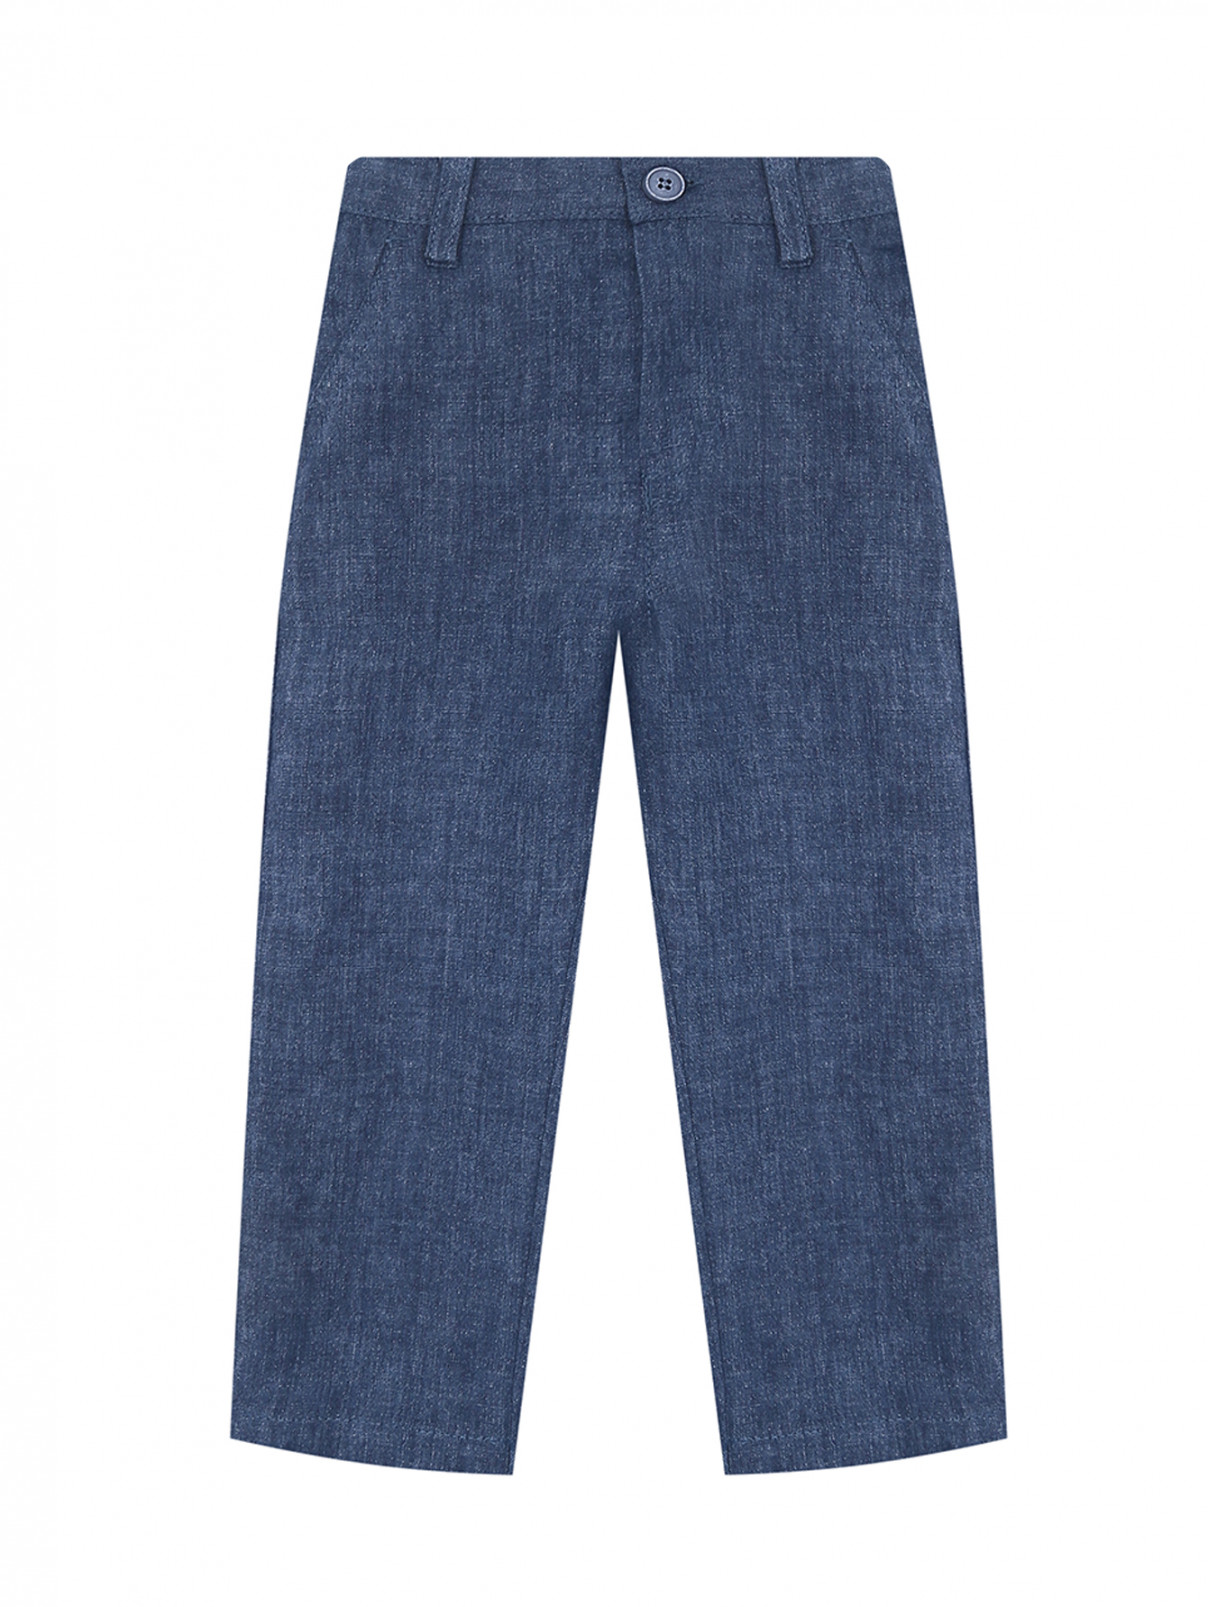 Однотонные брюки изо льна с карманами Il Gufo  –  Общий вид  – Цвет:  Синий